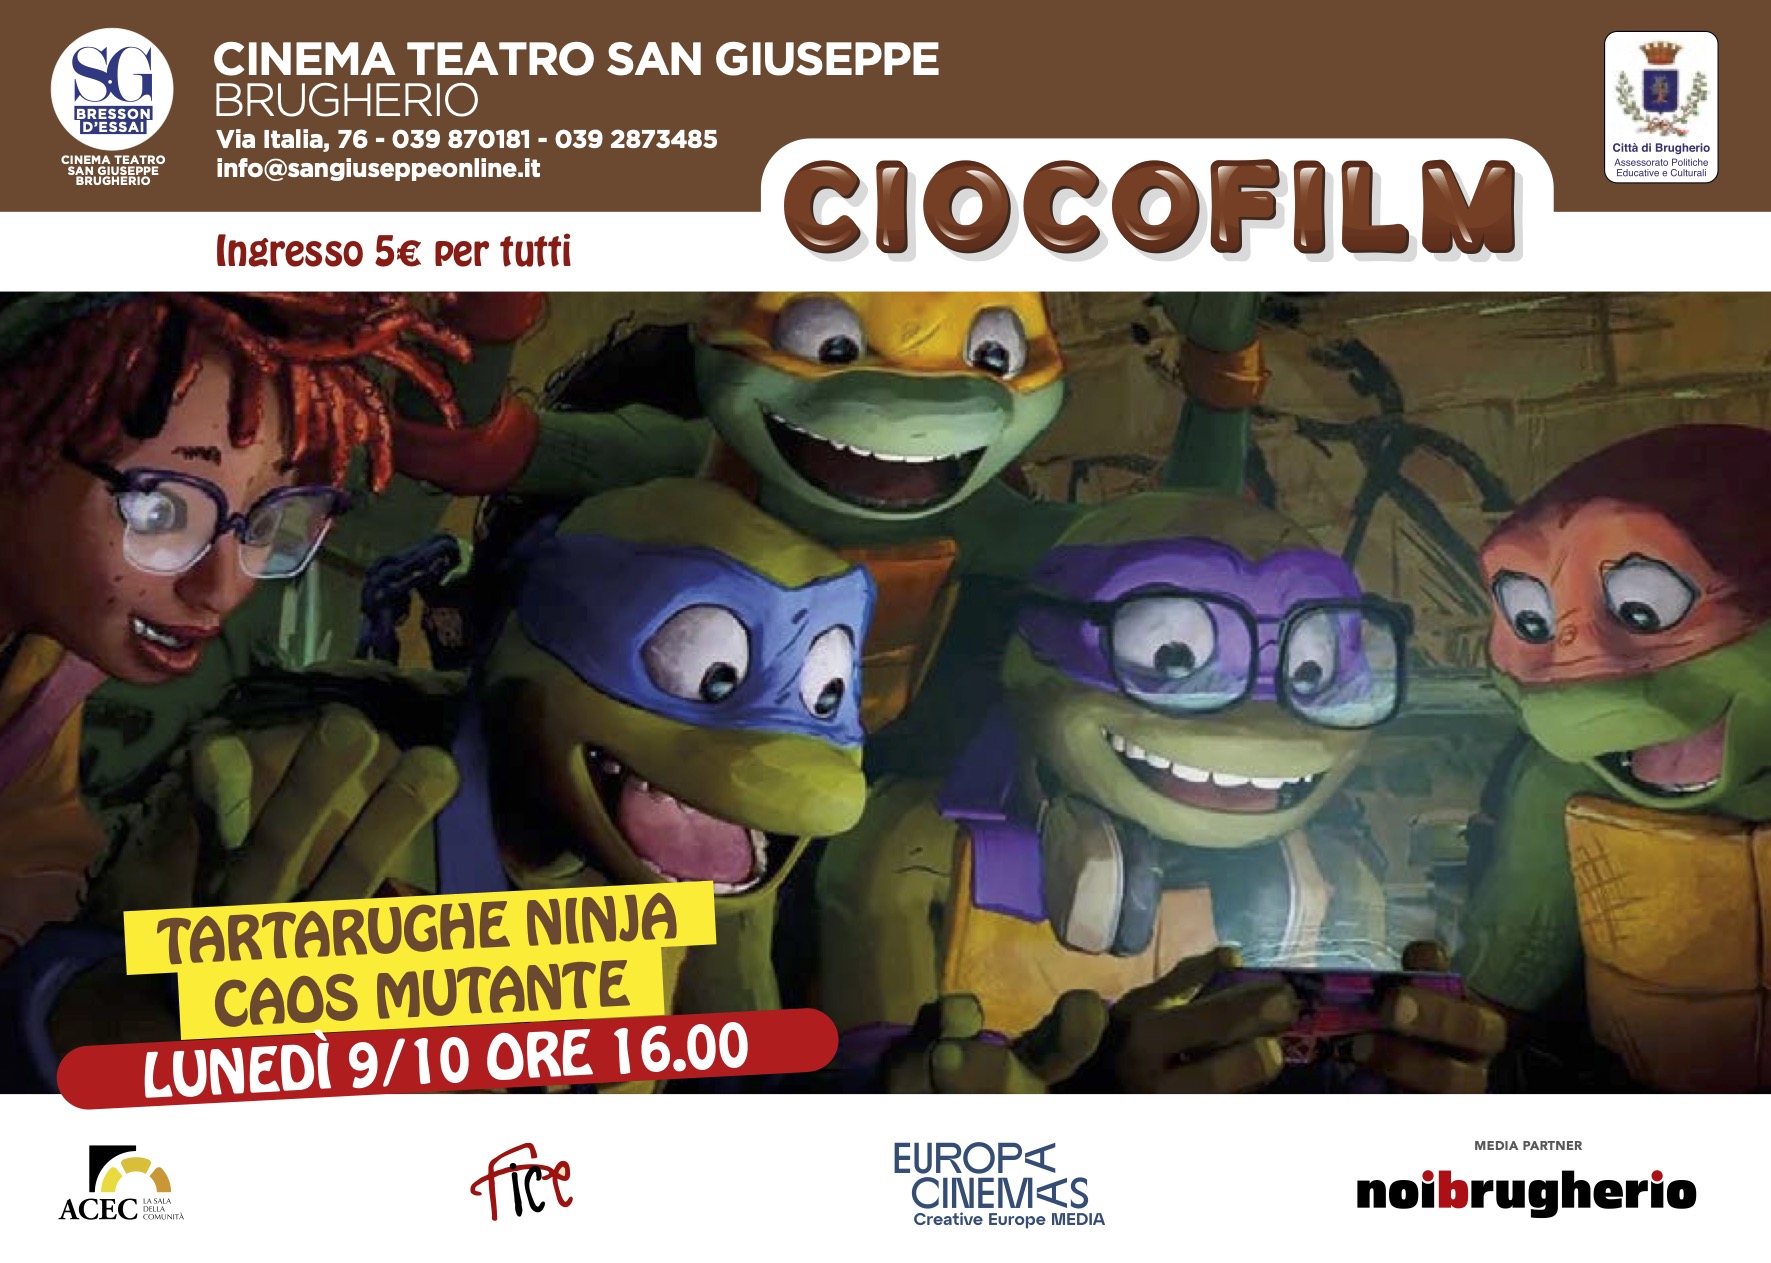 Immagine Per i Ciocofilm al San Giuseppe: 